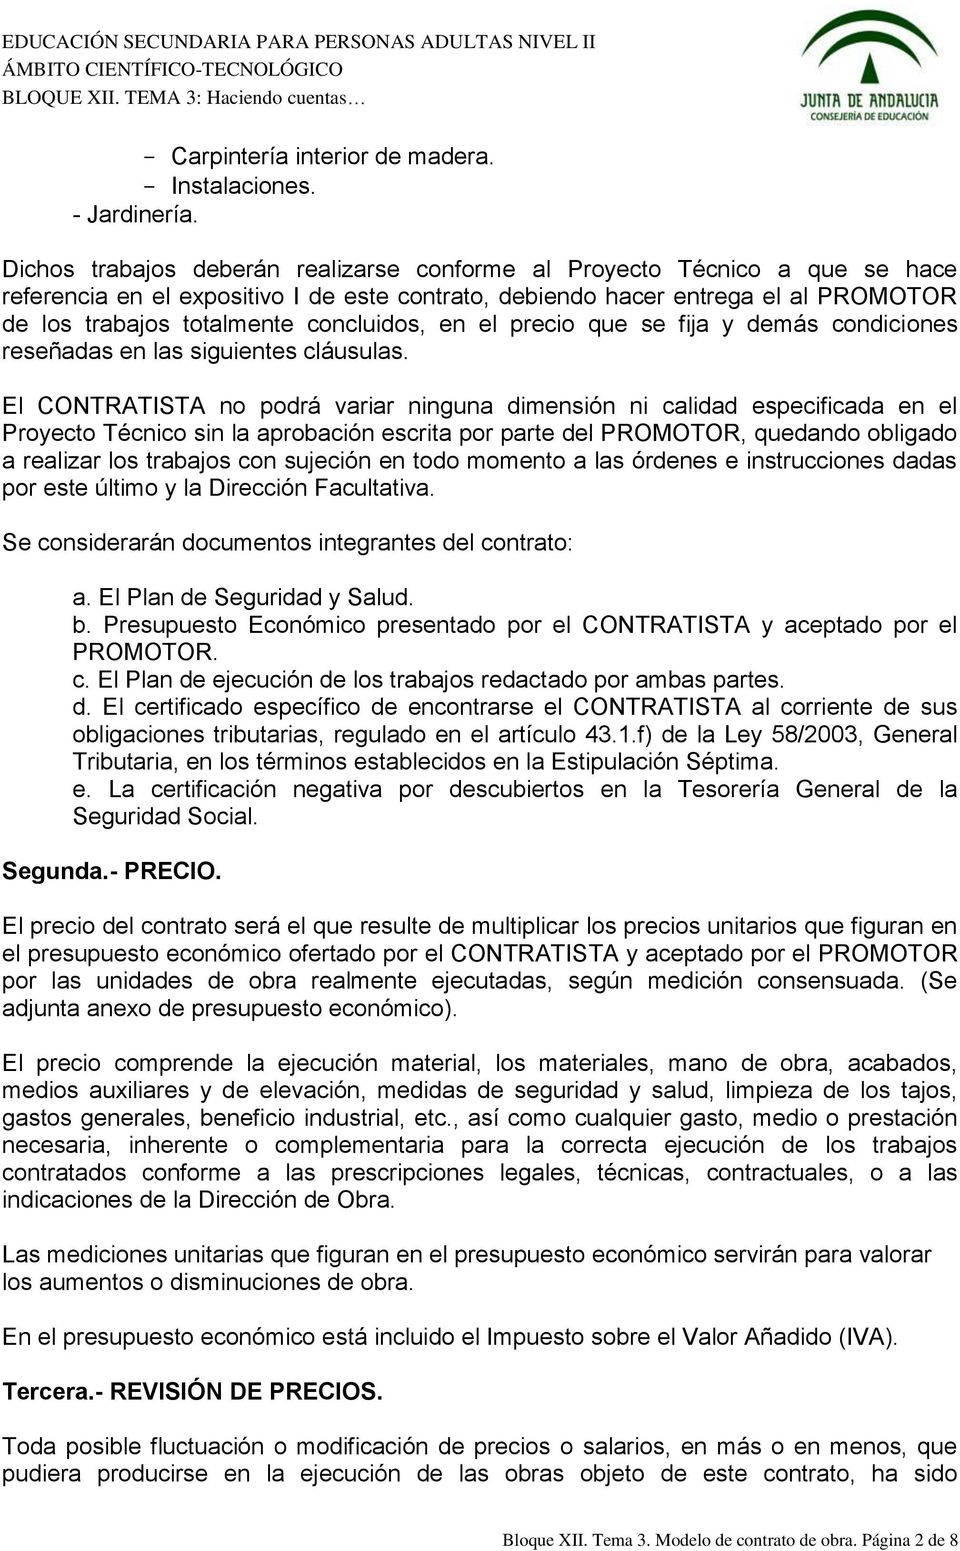 MODELO DE CONTRATO DE OBRA - PDF Free Download